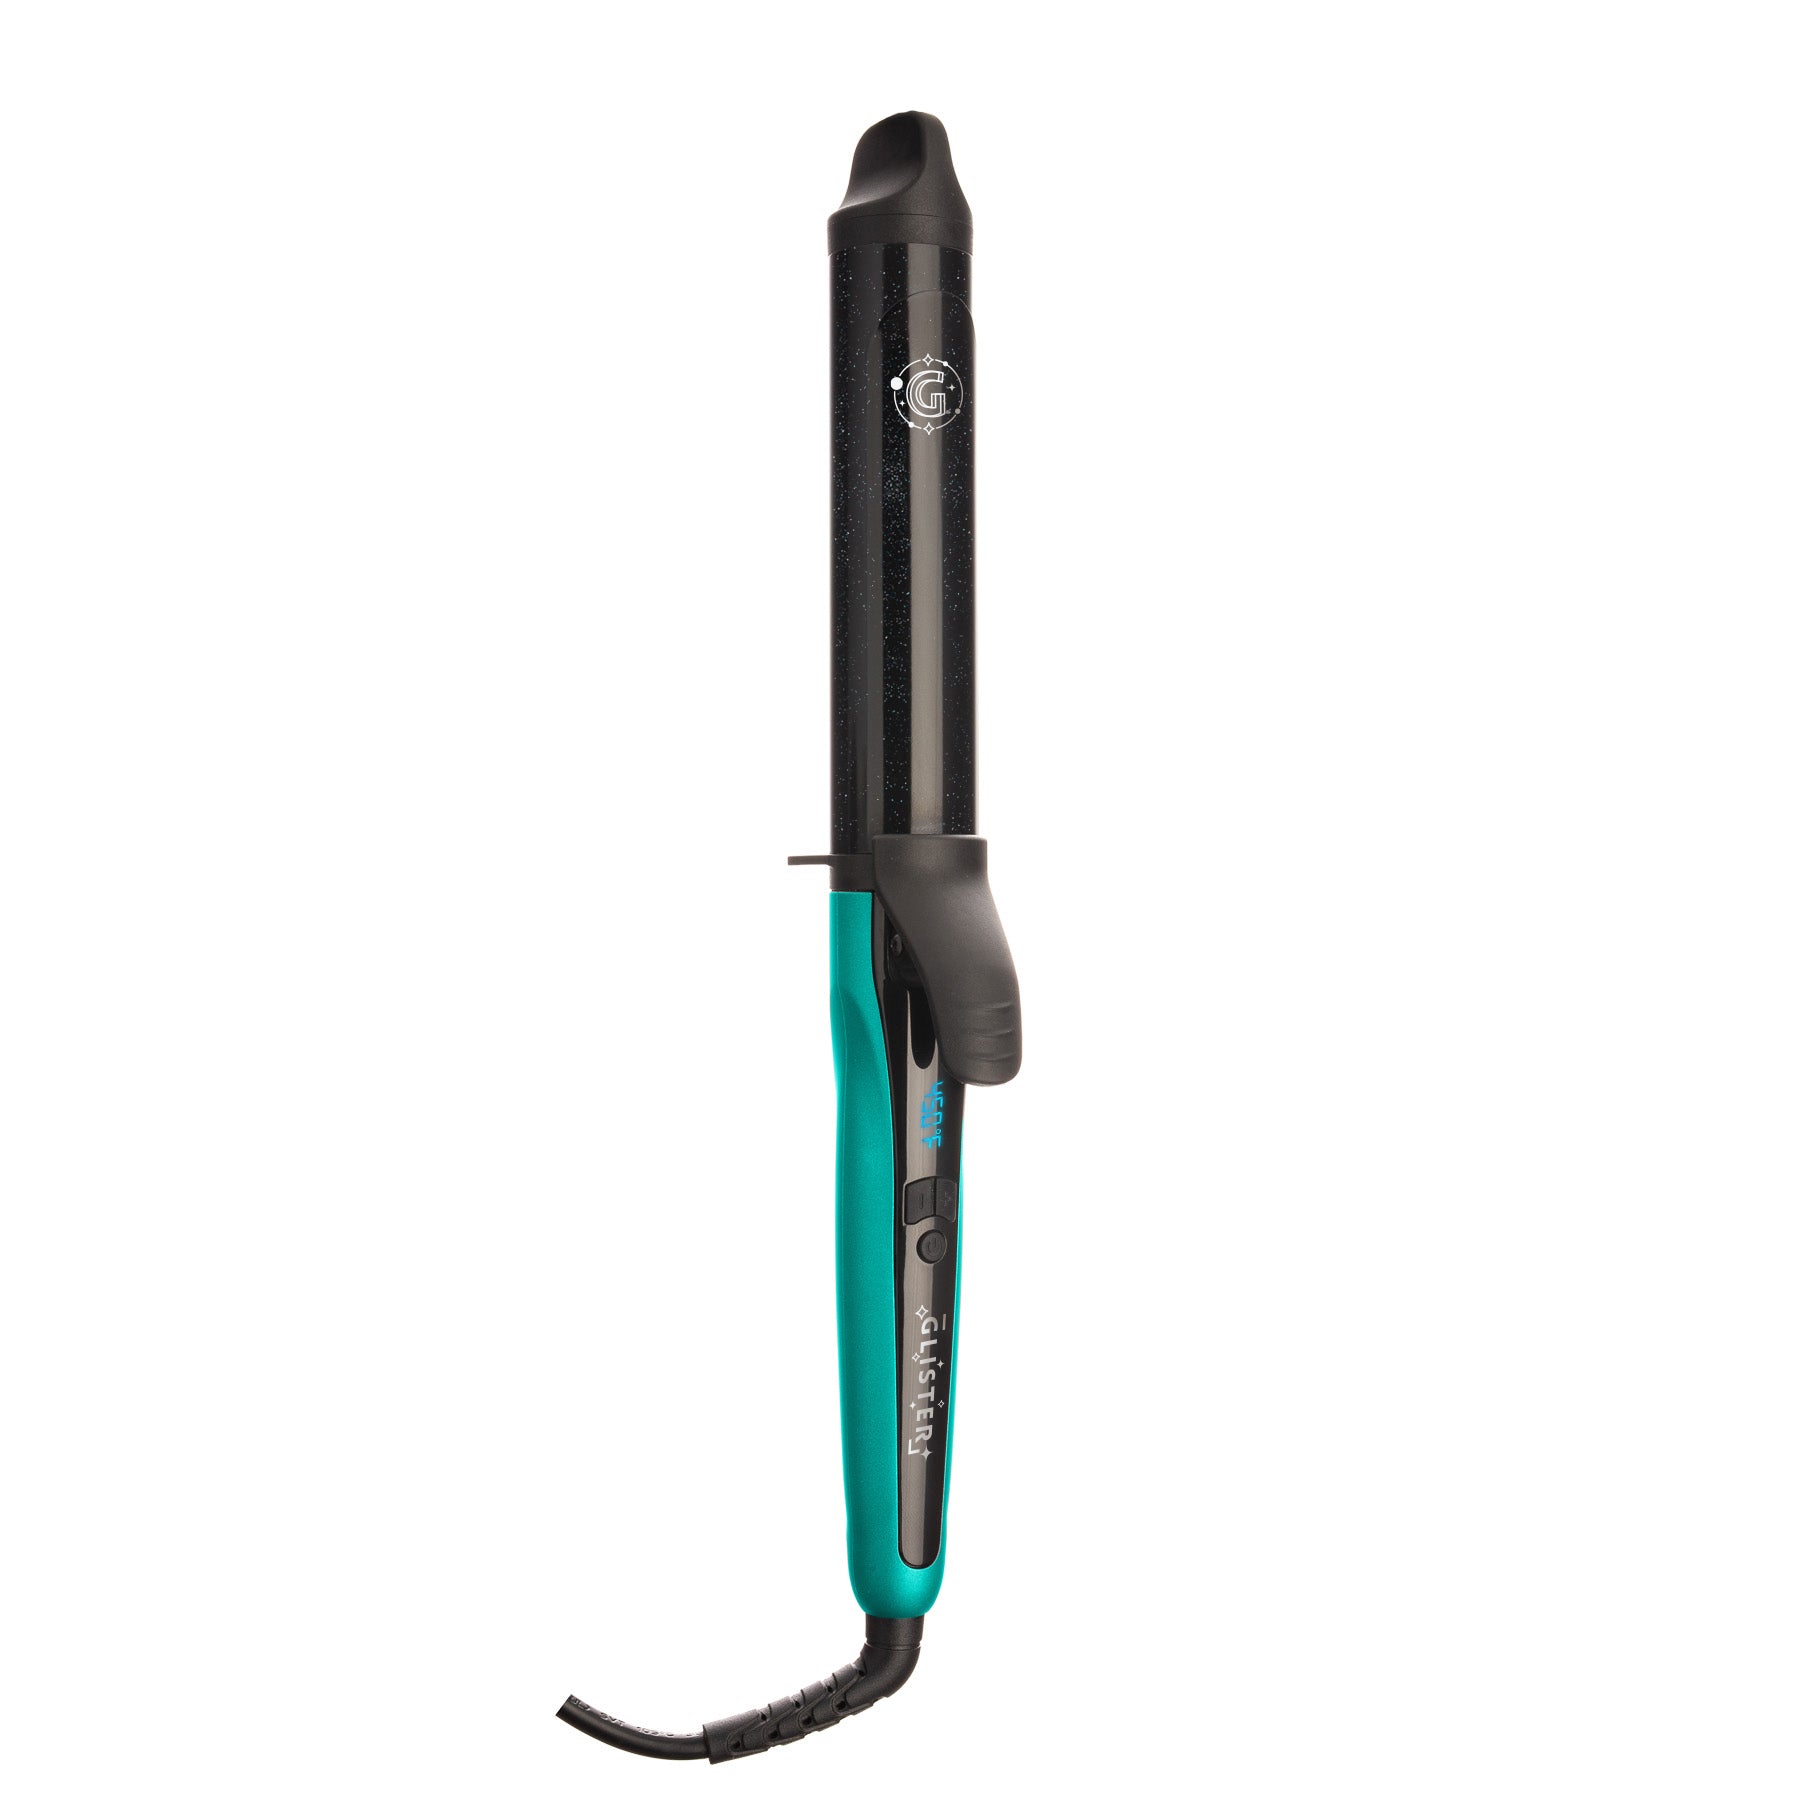 Interstellar Digital 32mm Clip Curler - Biscay Turquoise